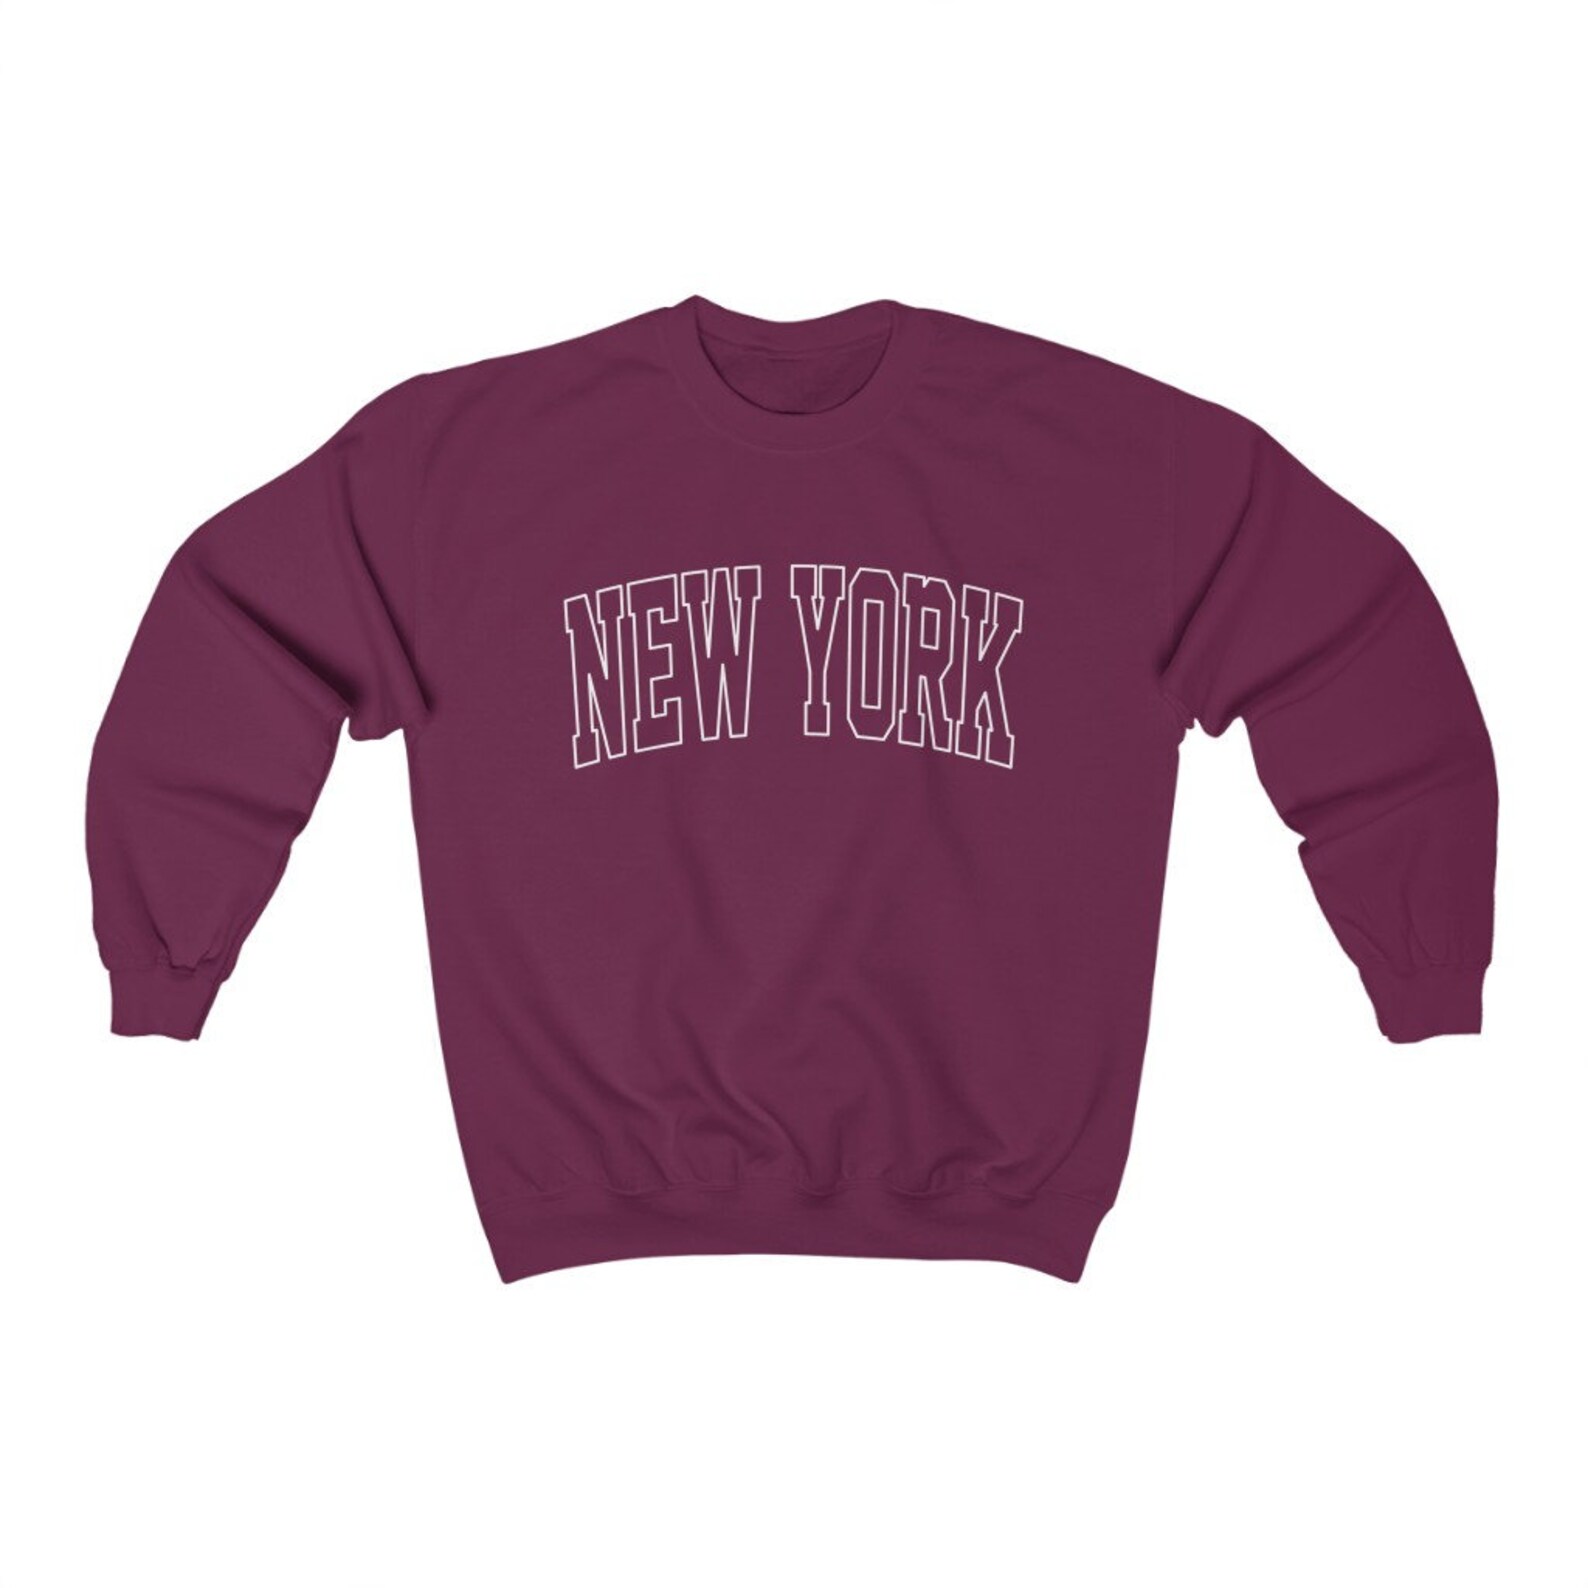 New York Sweatshirt New York Crewneck New York City Sweatshirt | Etsy